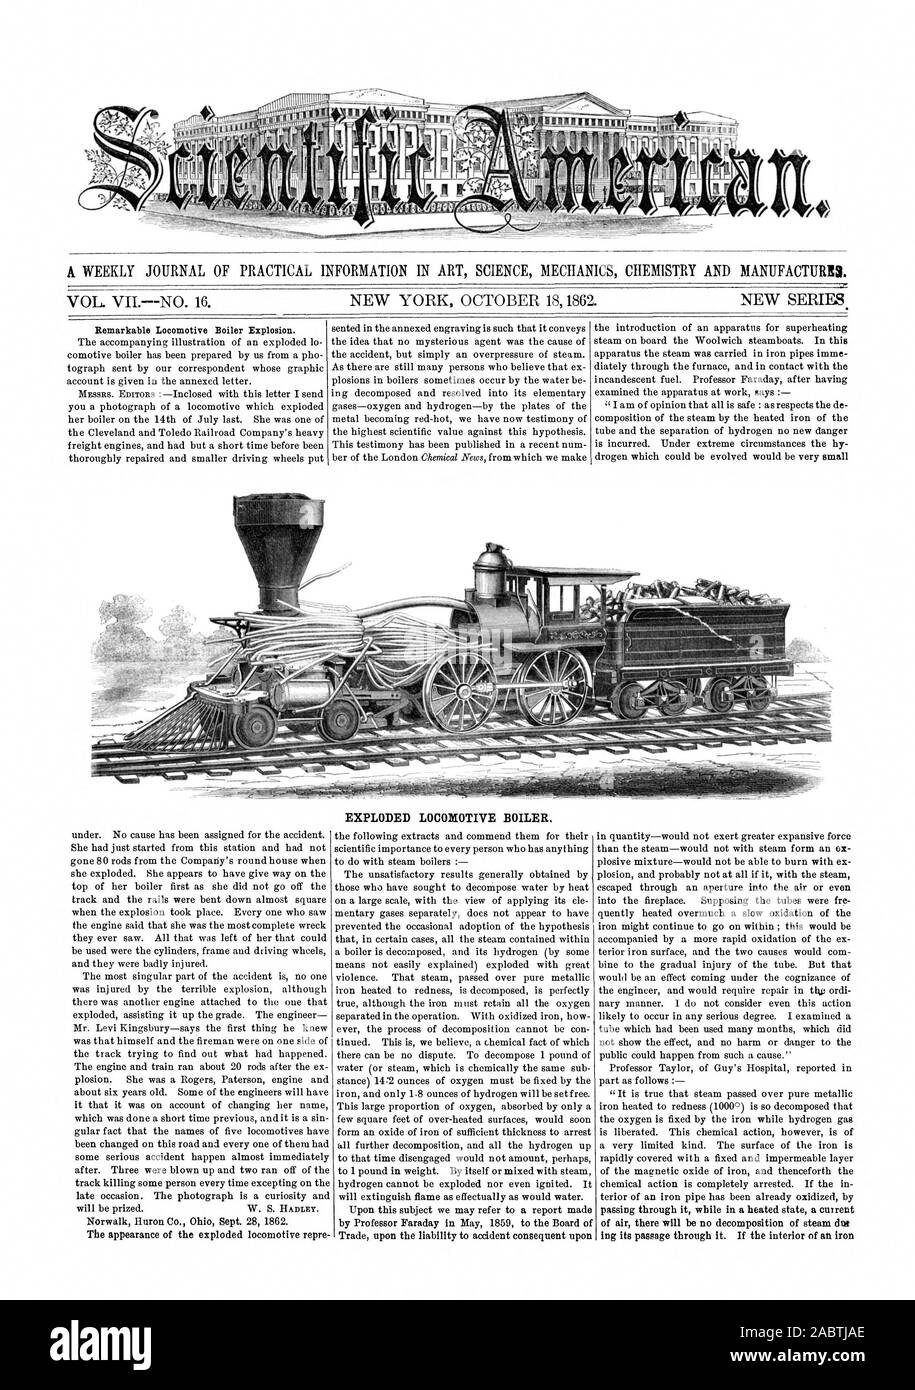 EXPLODED LOCOMOTIVE BOILER., scientific american, 1862-10-18 Stock Photo